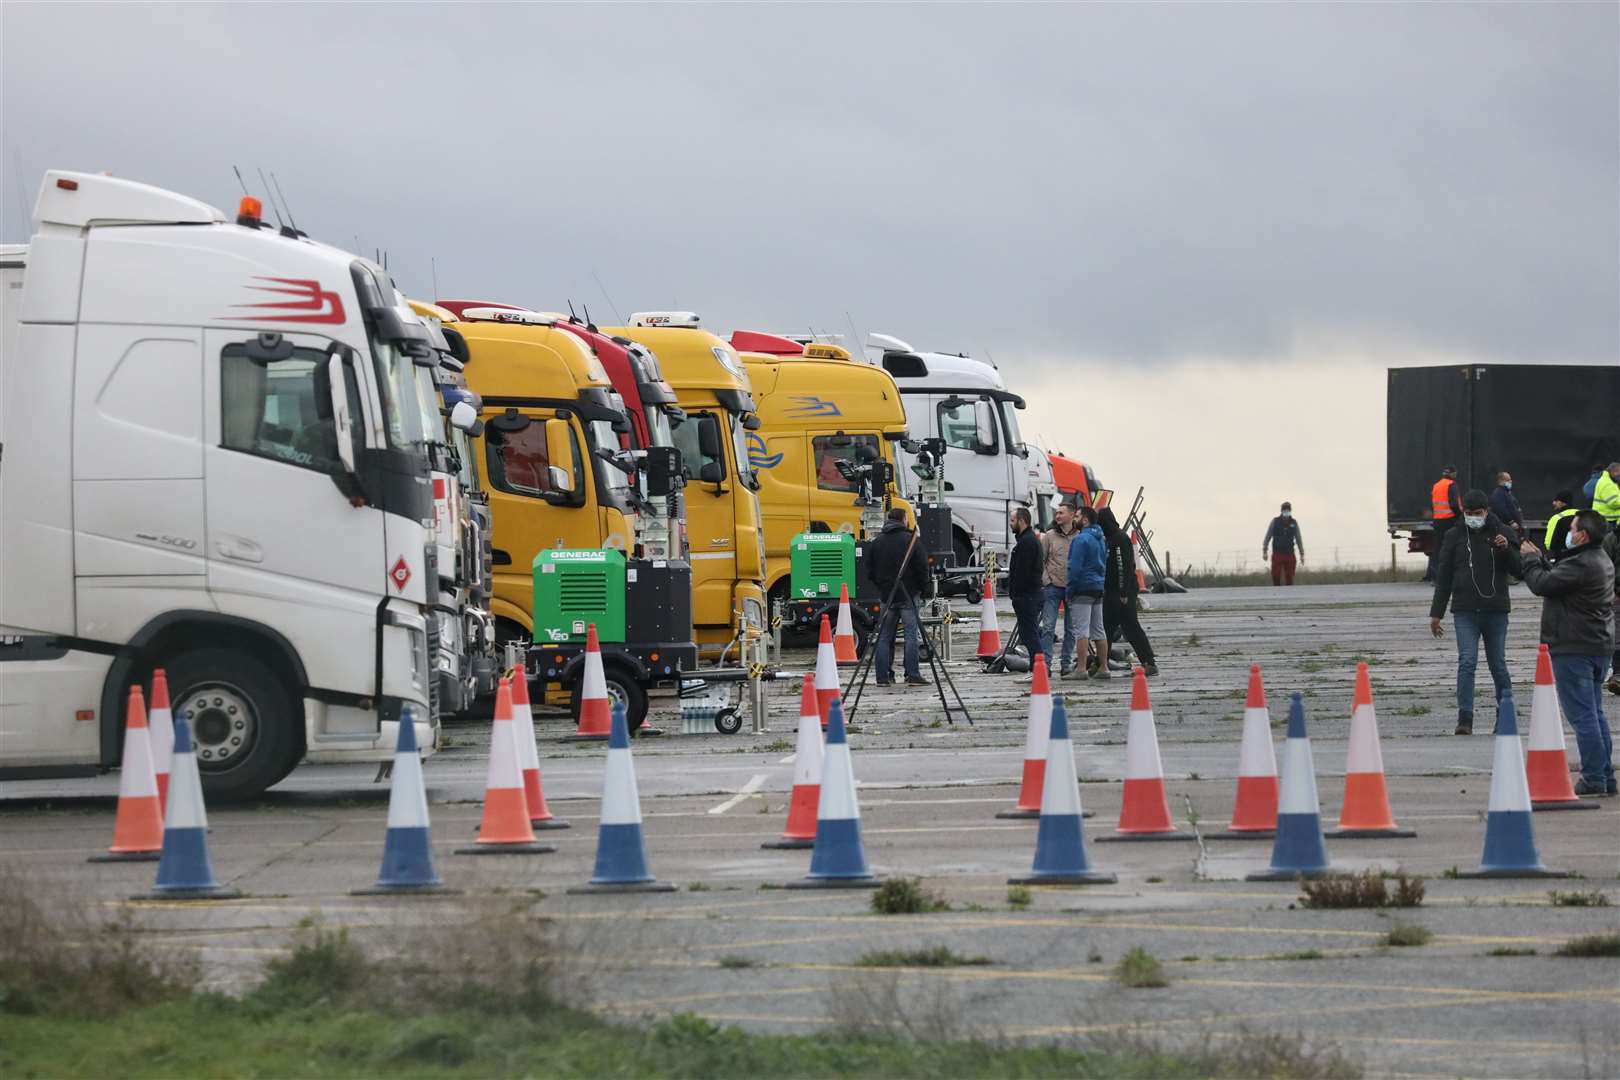 Lorries at Manston in December. Picture: UKNIP